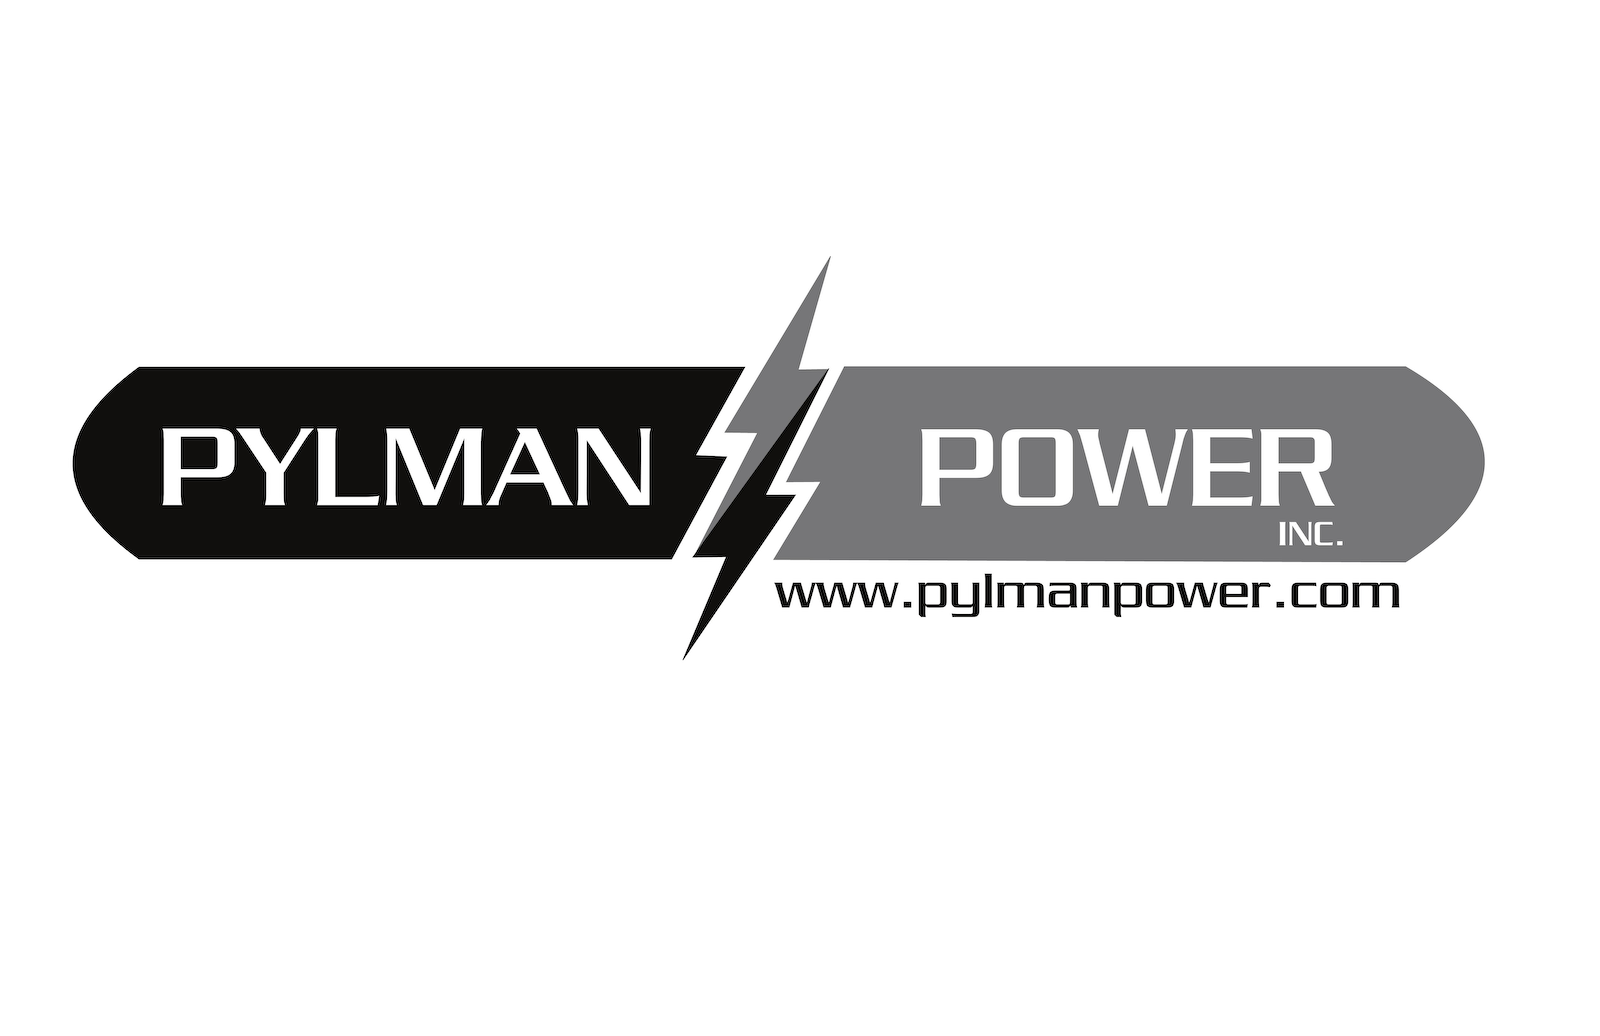 Pyleman/Power